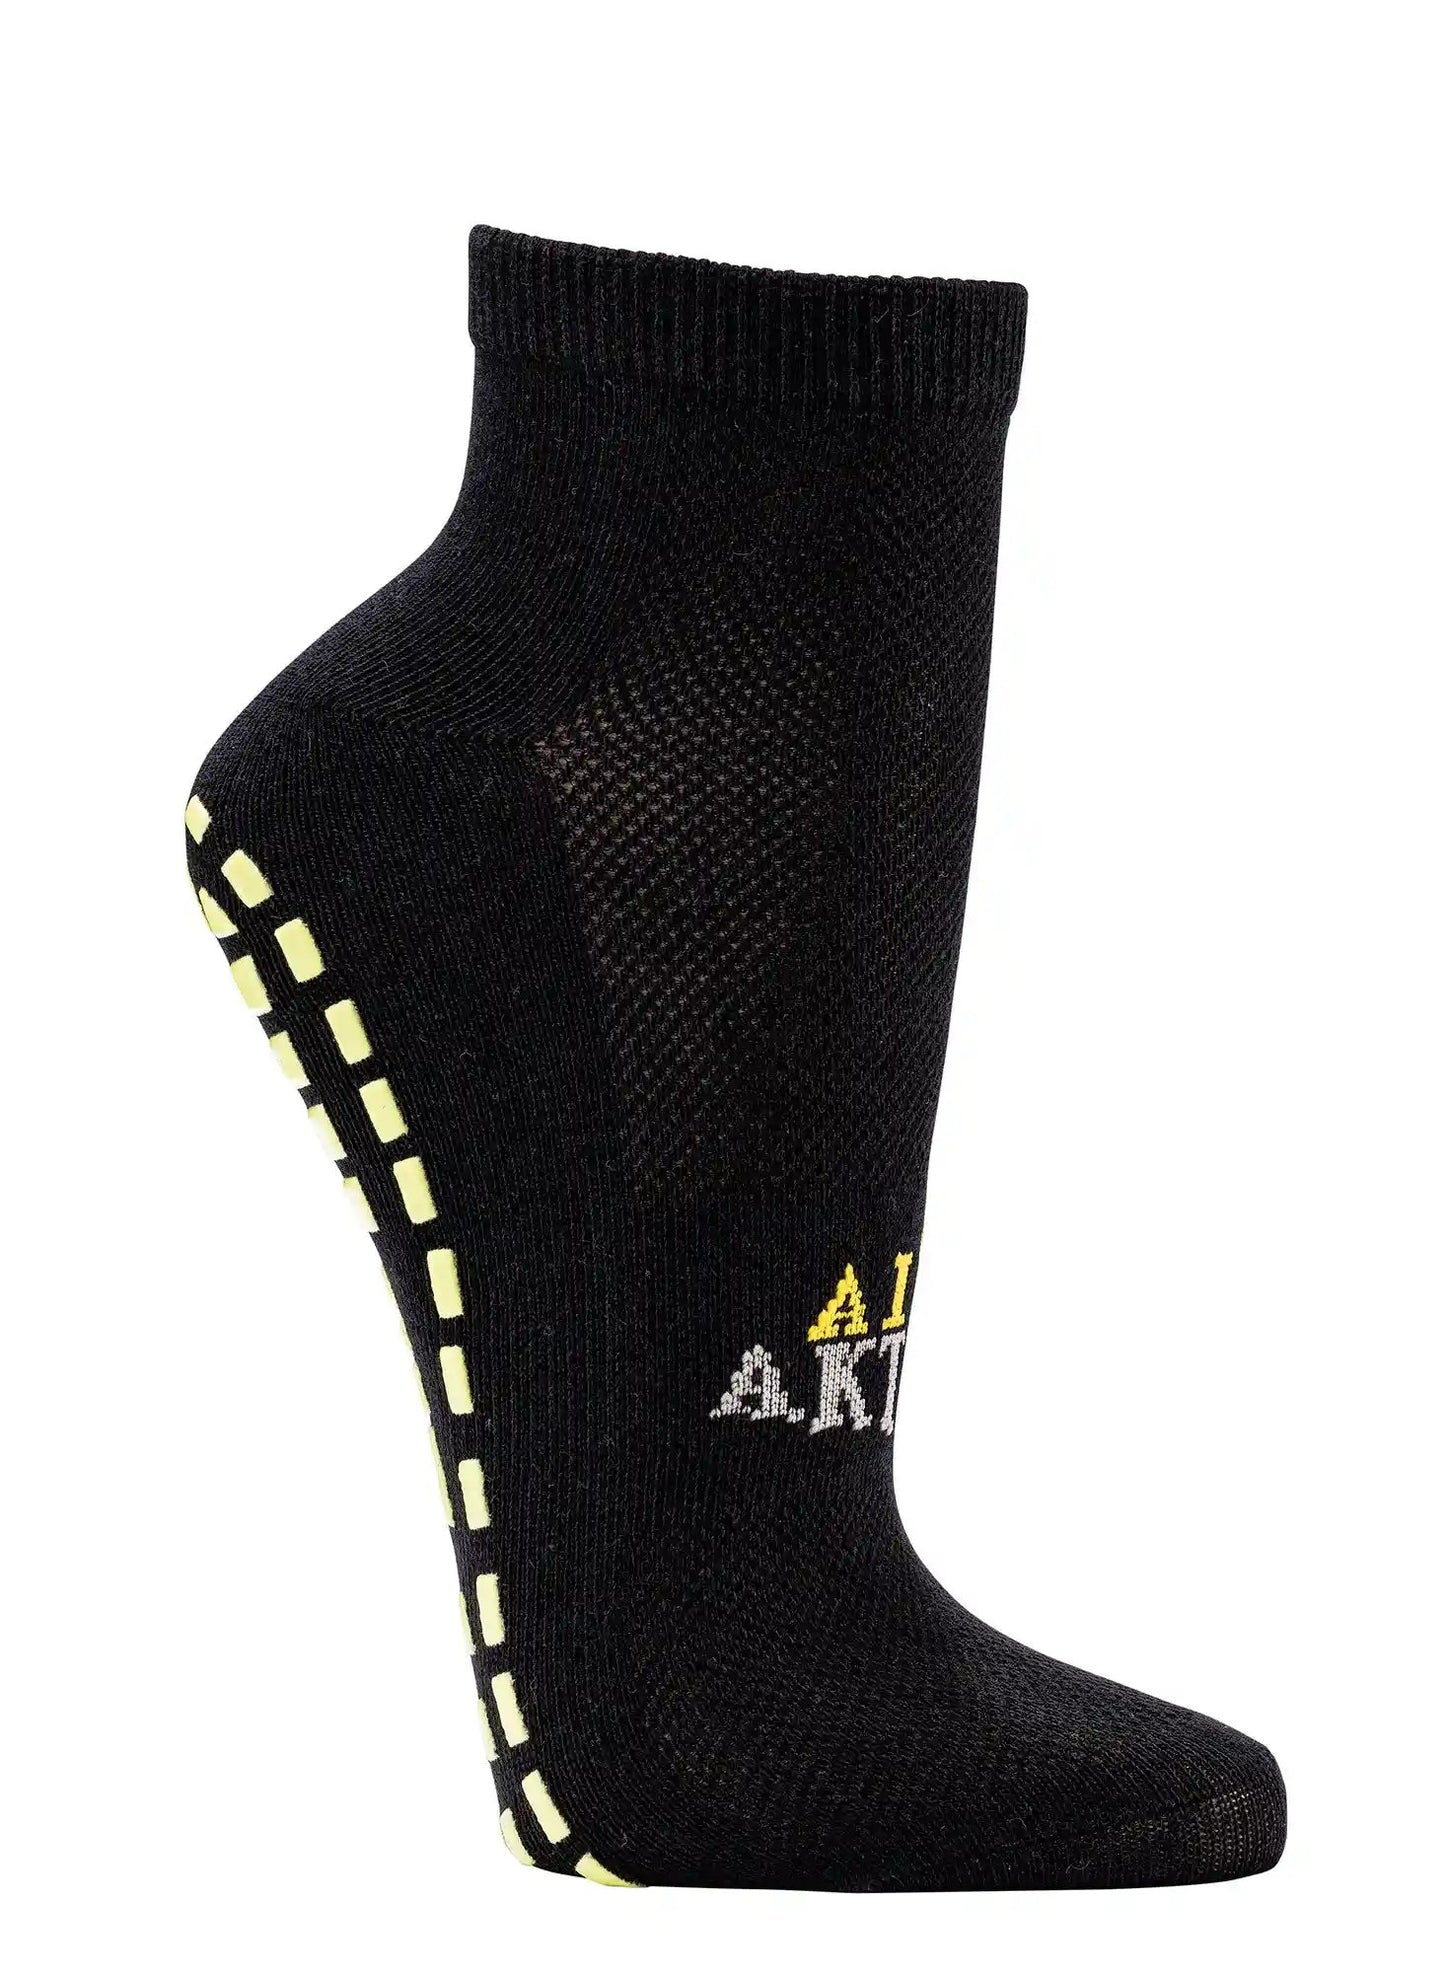 2 bis 6 Paar Sportsocken Sneaker mit ABS Socken Fit Sox Jump Socks Anti Rutsch